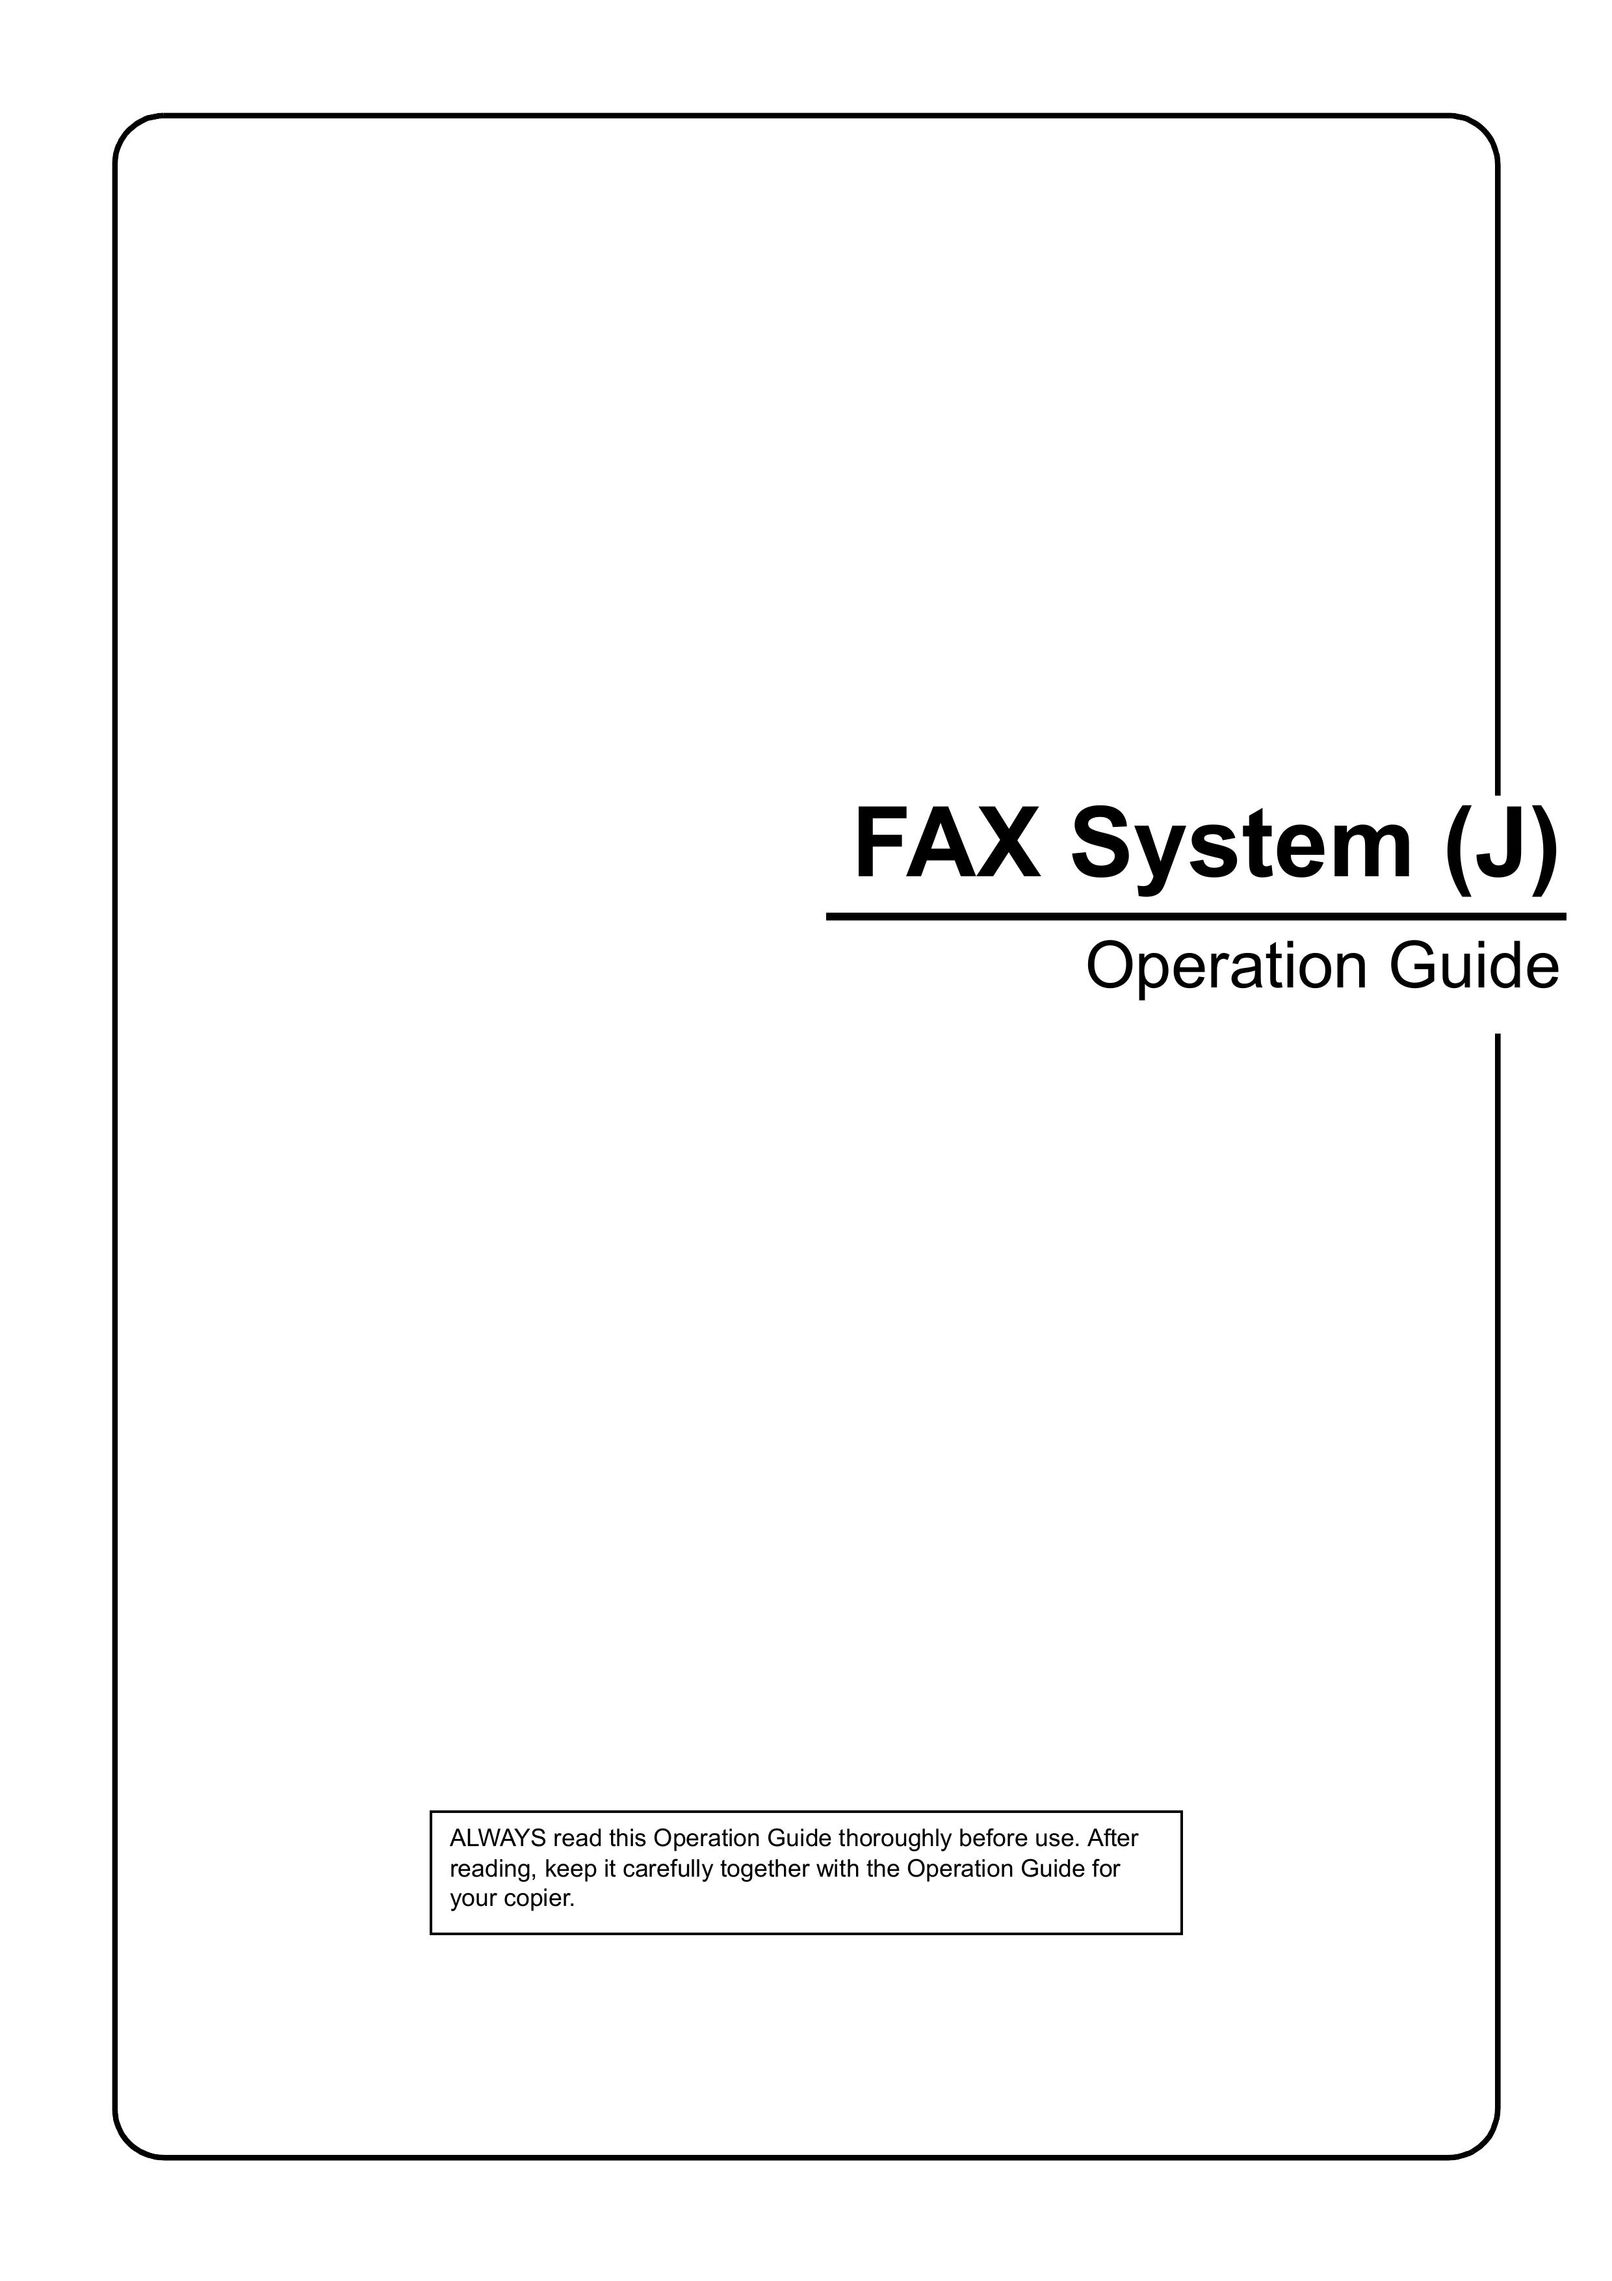 Xerox FAX System (J) Fax Machine User Manual